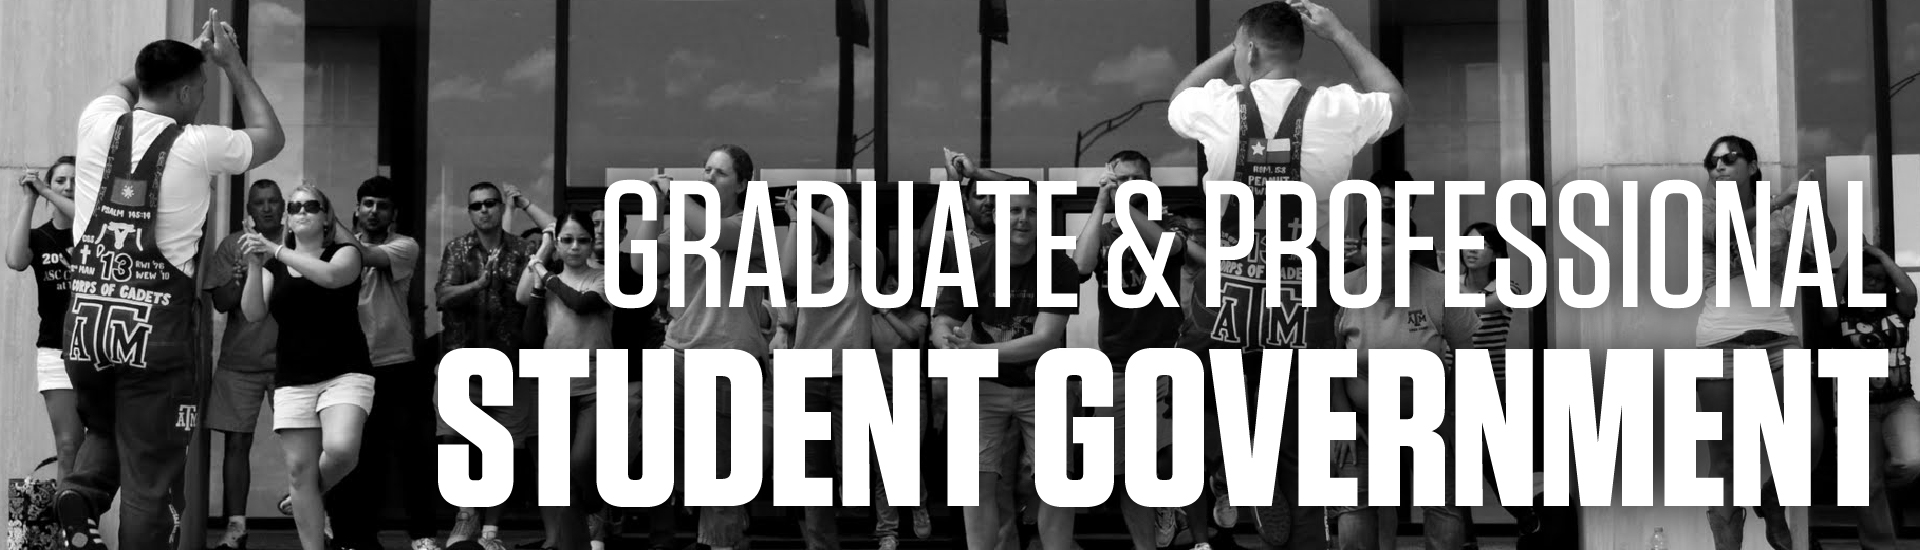 Graduate & Professional Student Government